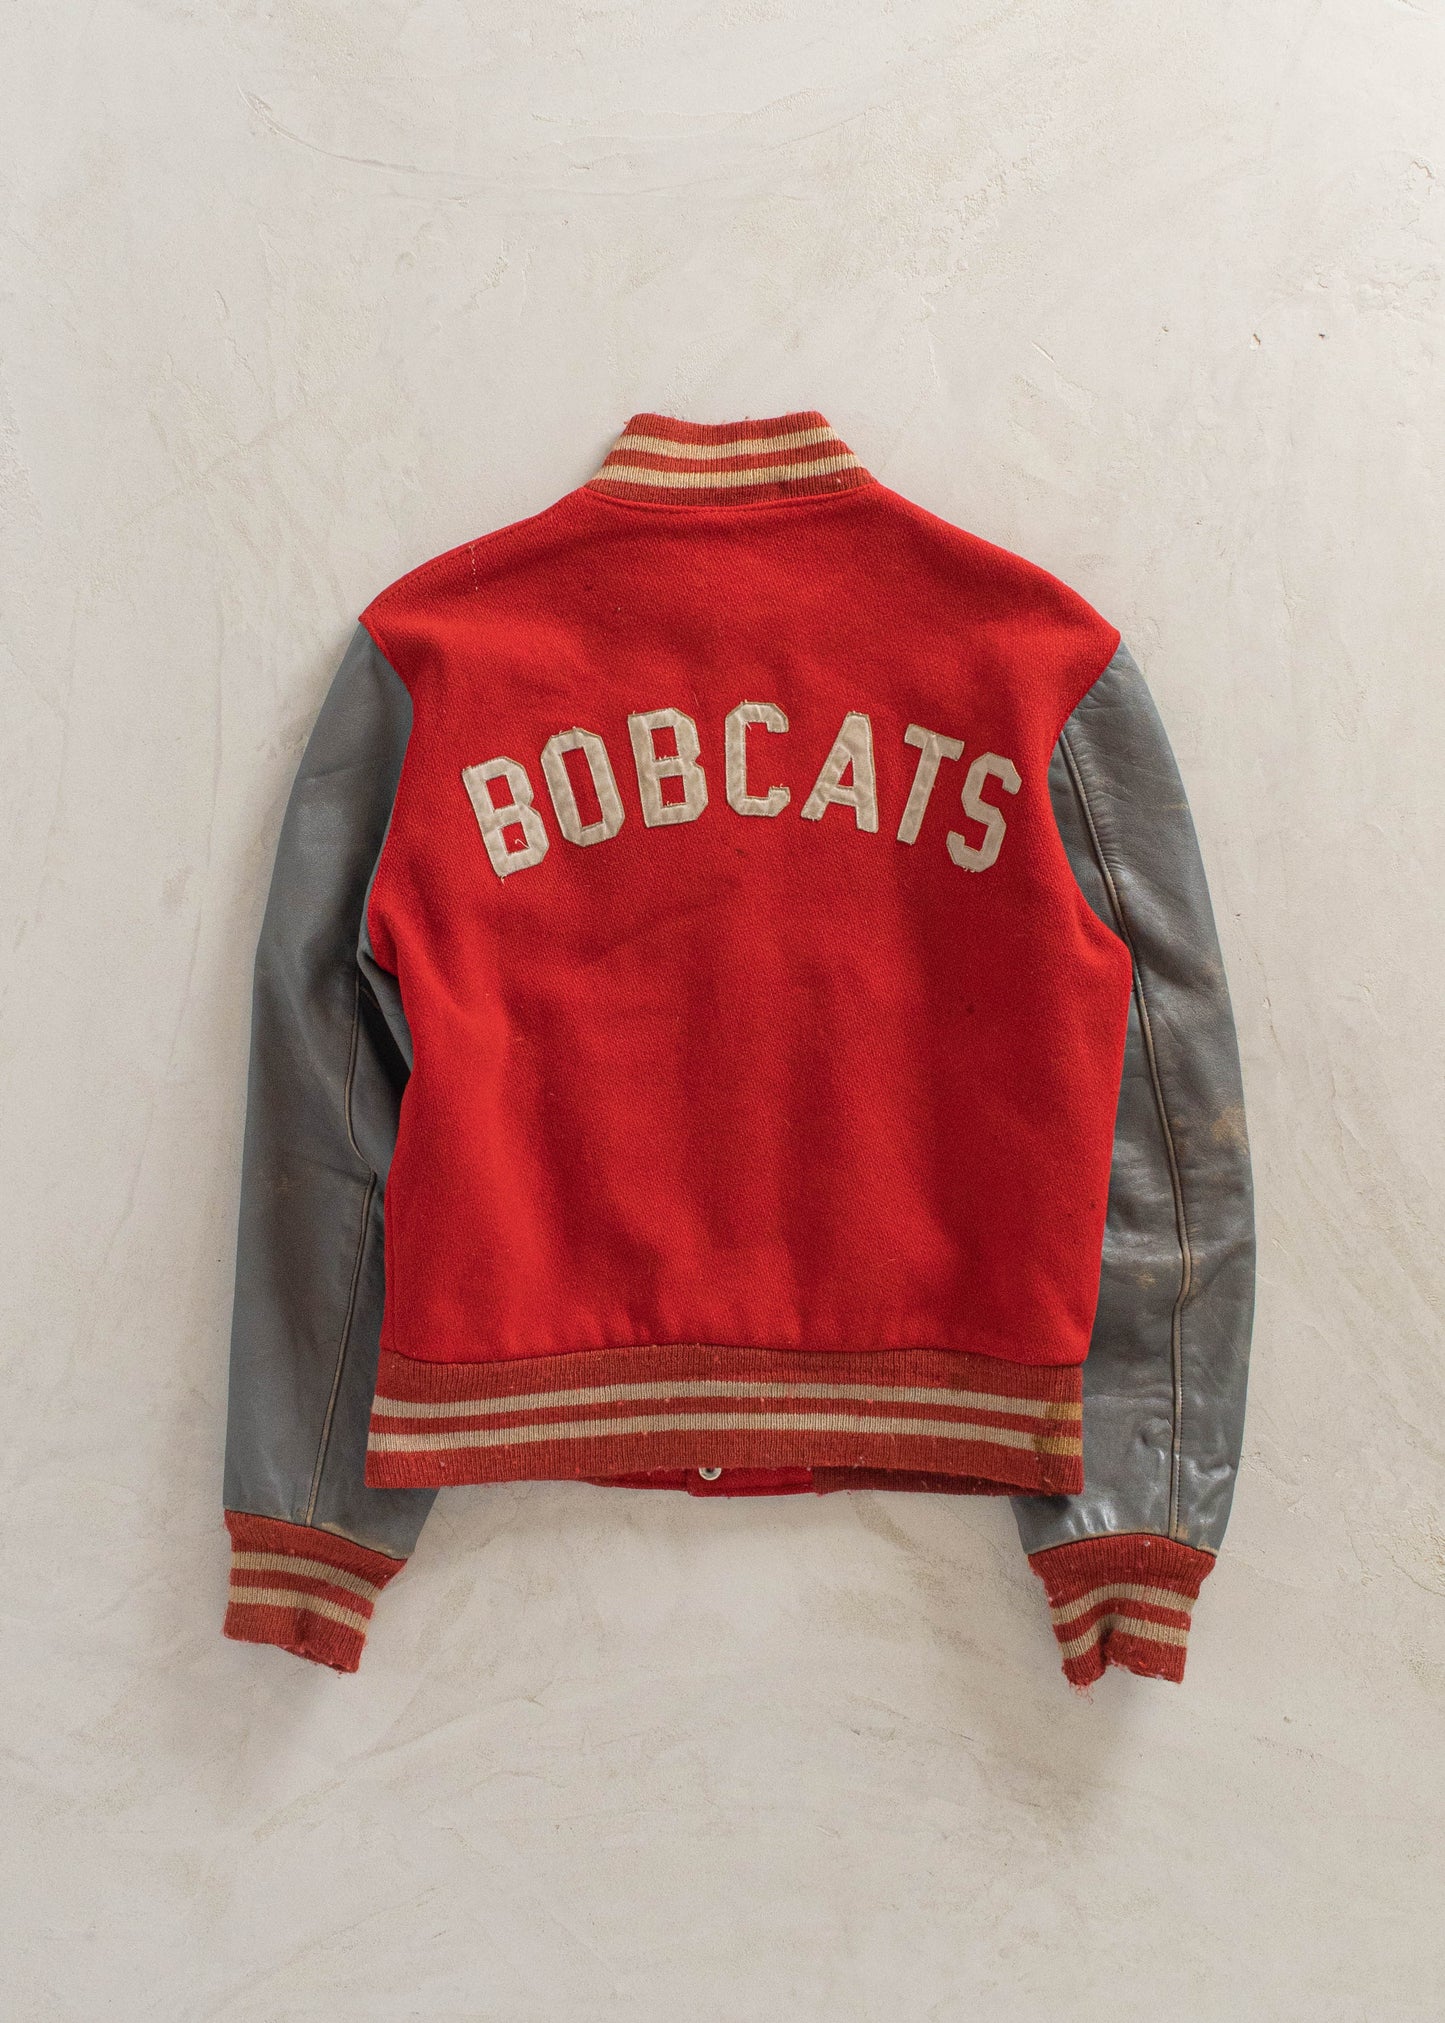 1980s Reed Sportswear Bobcats Varsity Jacket Size S/M